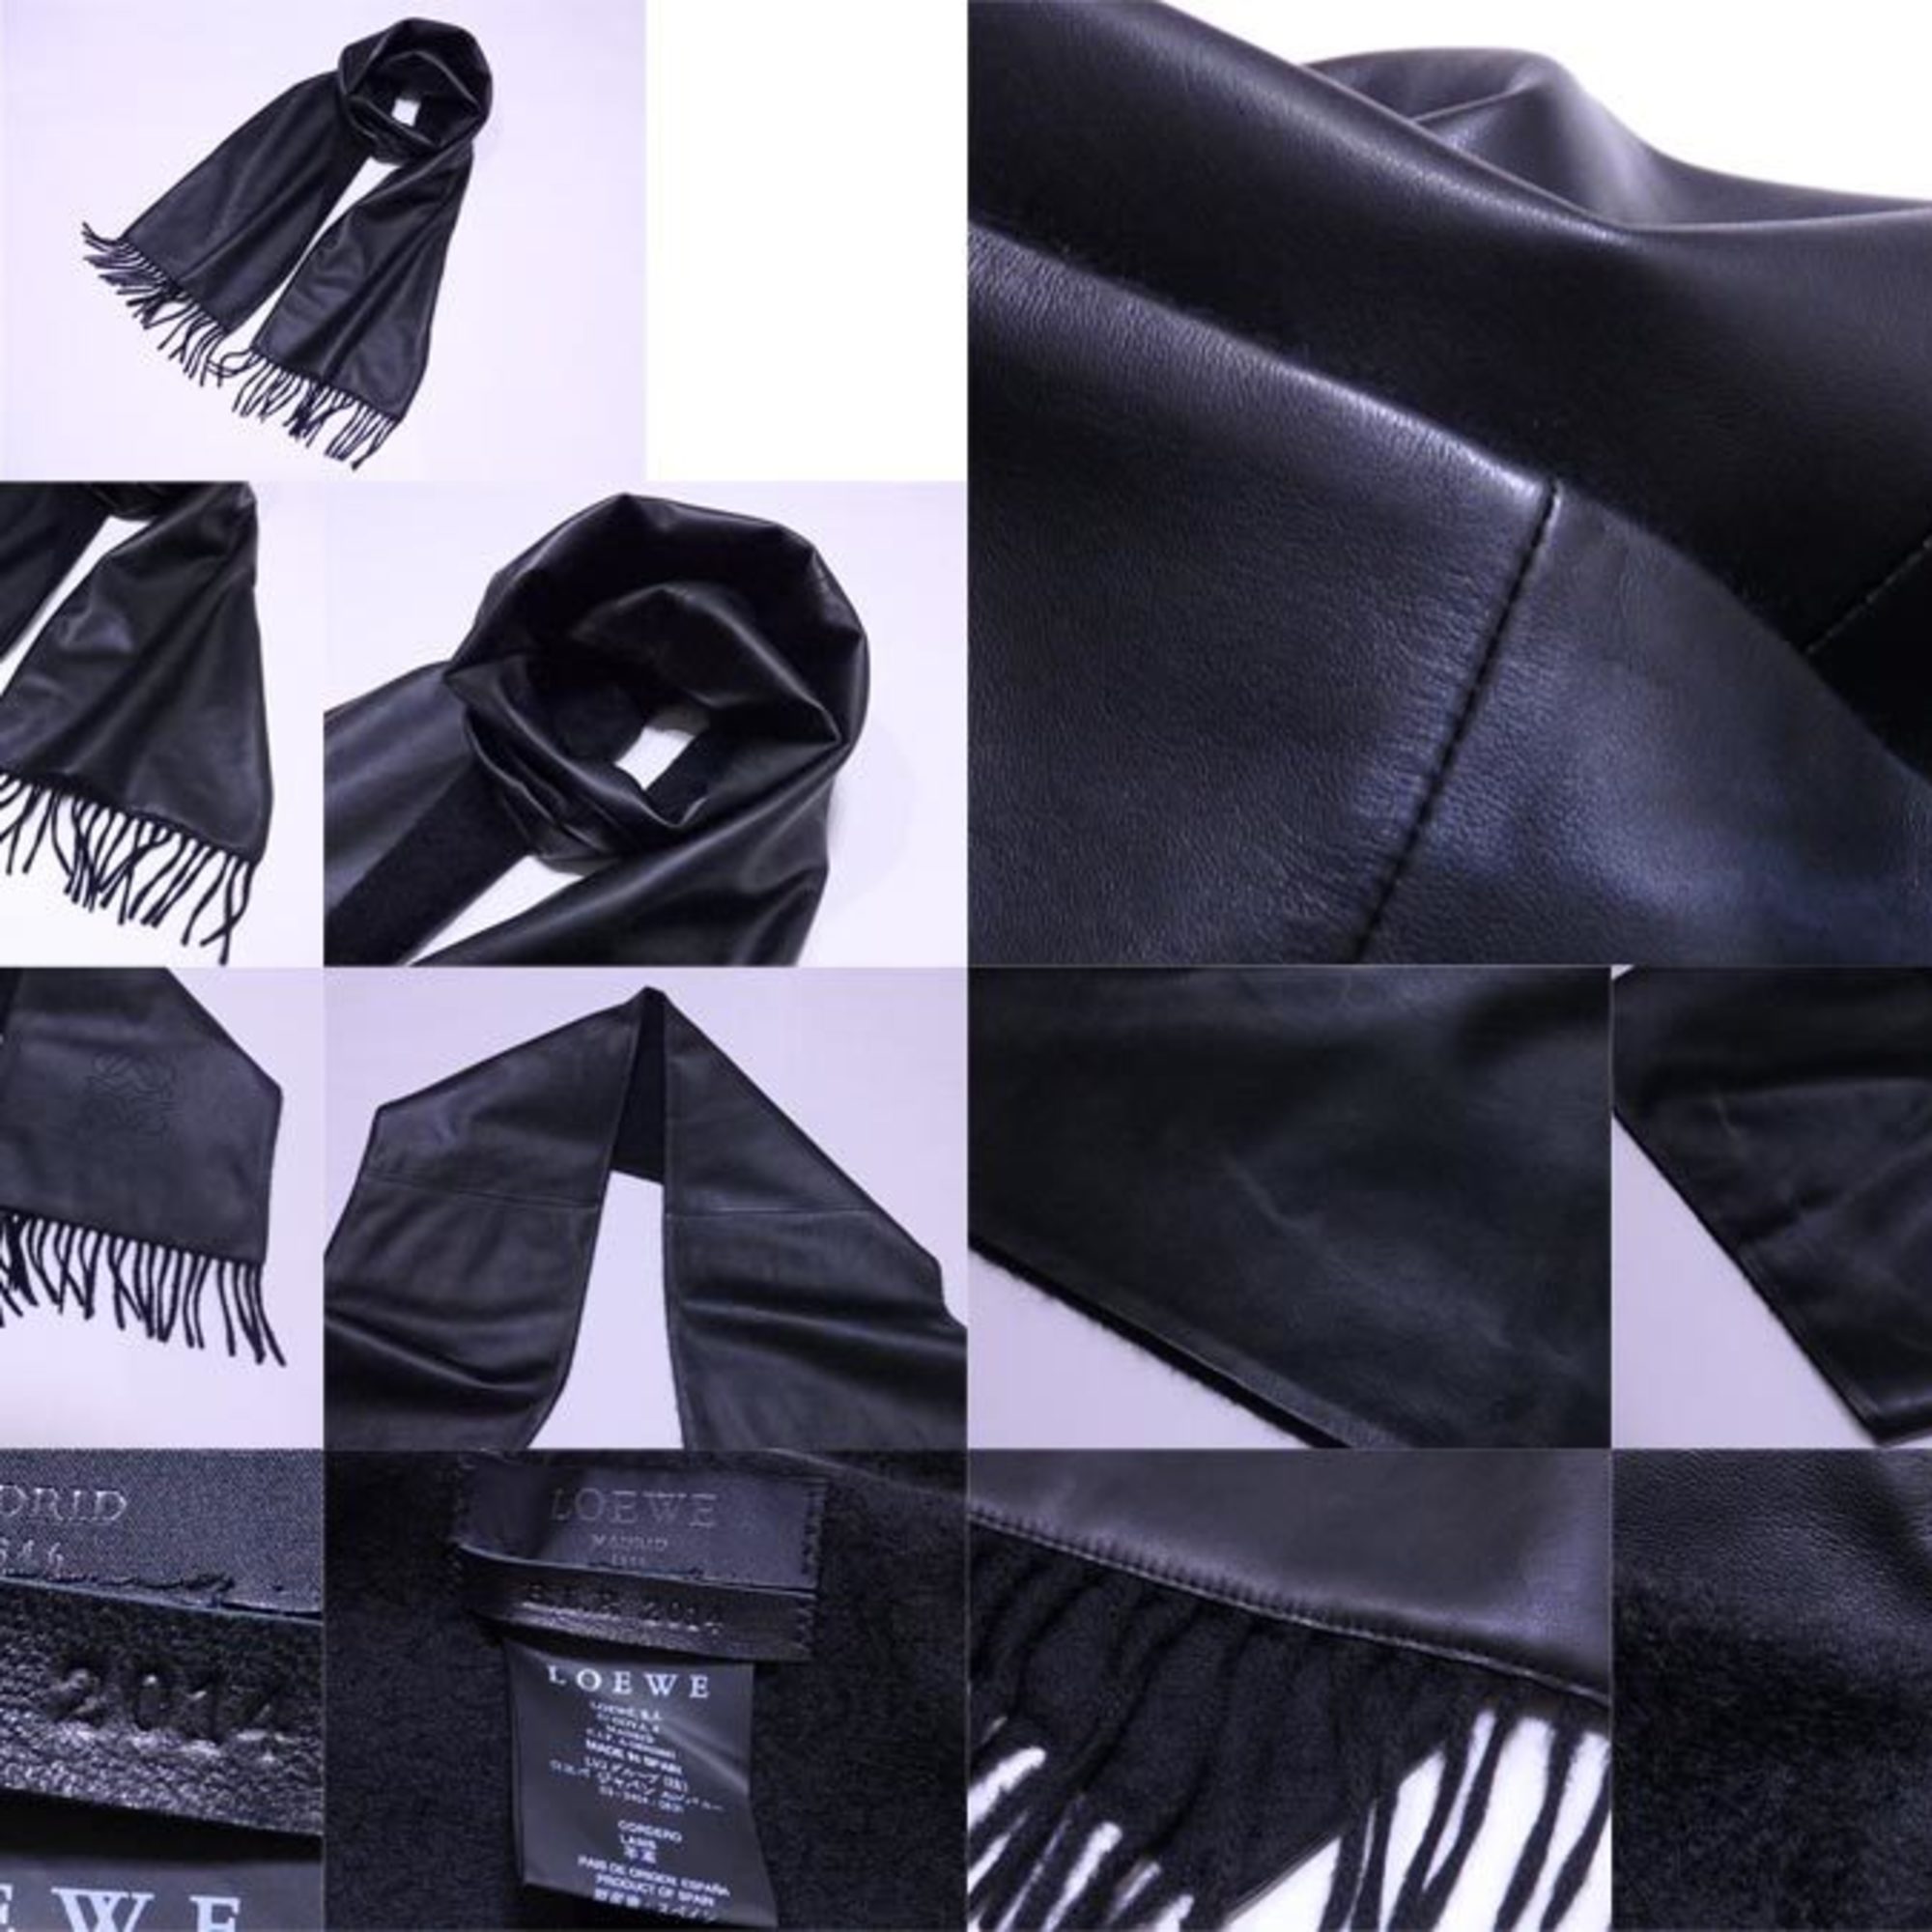 Loewe LOEWE shawl stole scarf anagram black leather x cashmere ladies